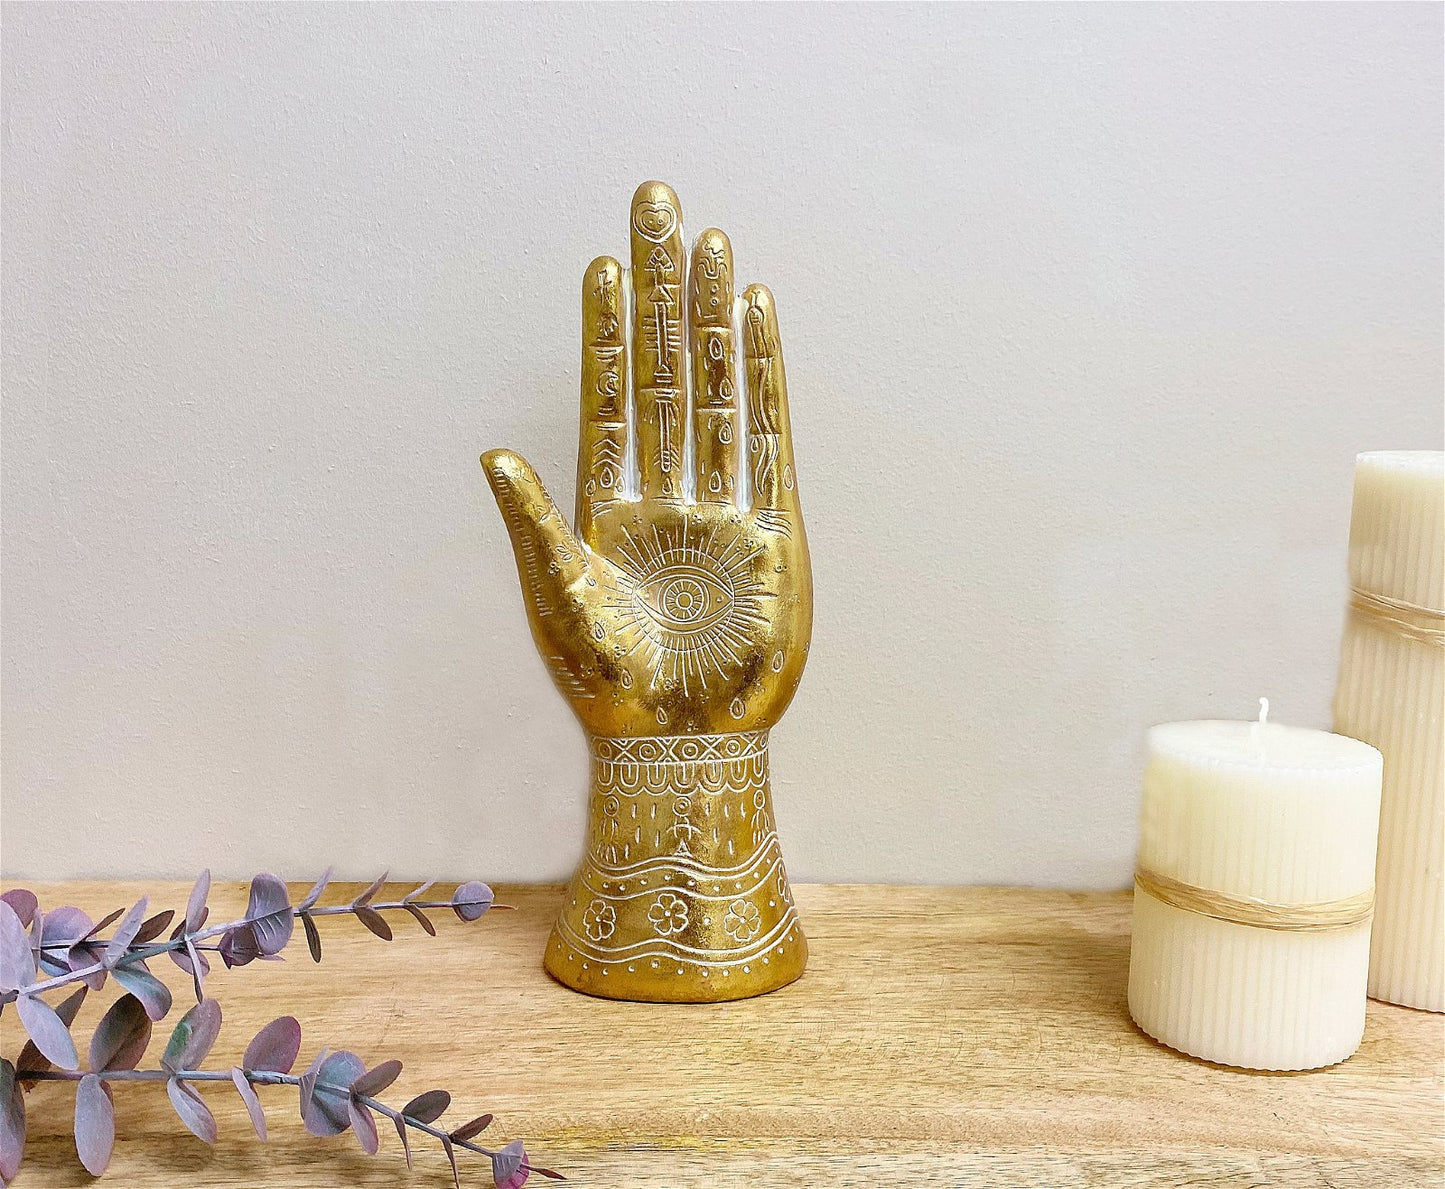 Gold Hamsa Hand Ornament